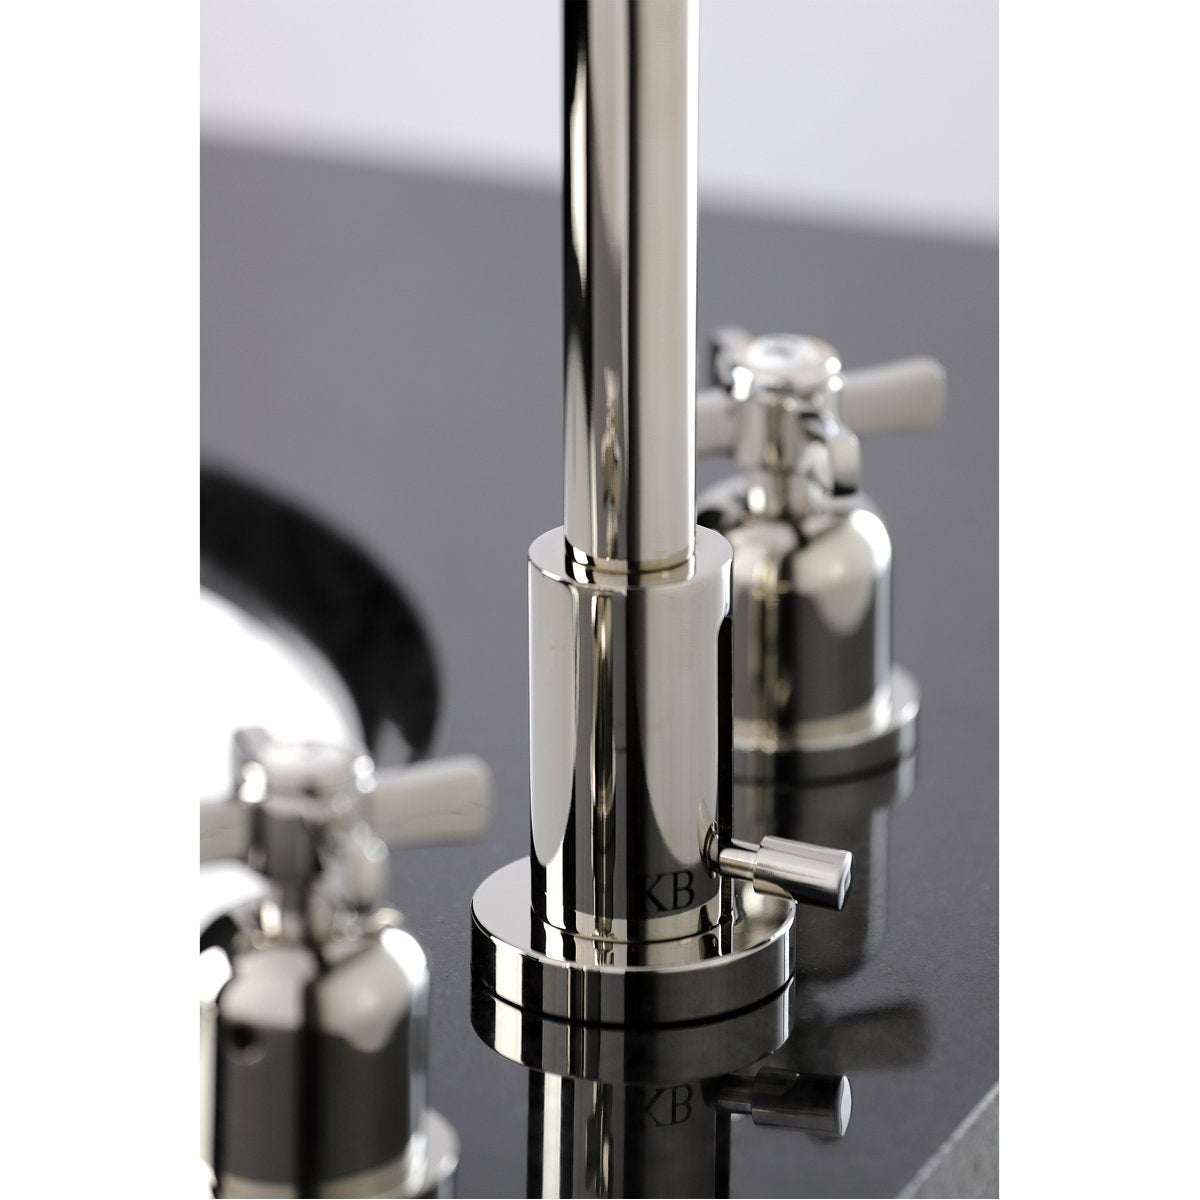 Kingston Brass Millennium Widespread Bathroom Faucet with Brass Pop-Up